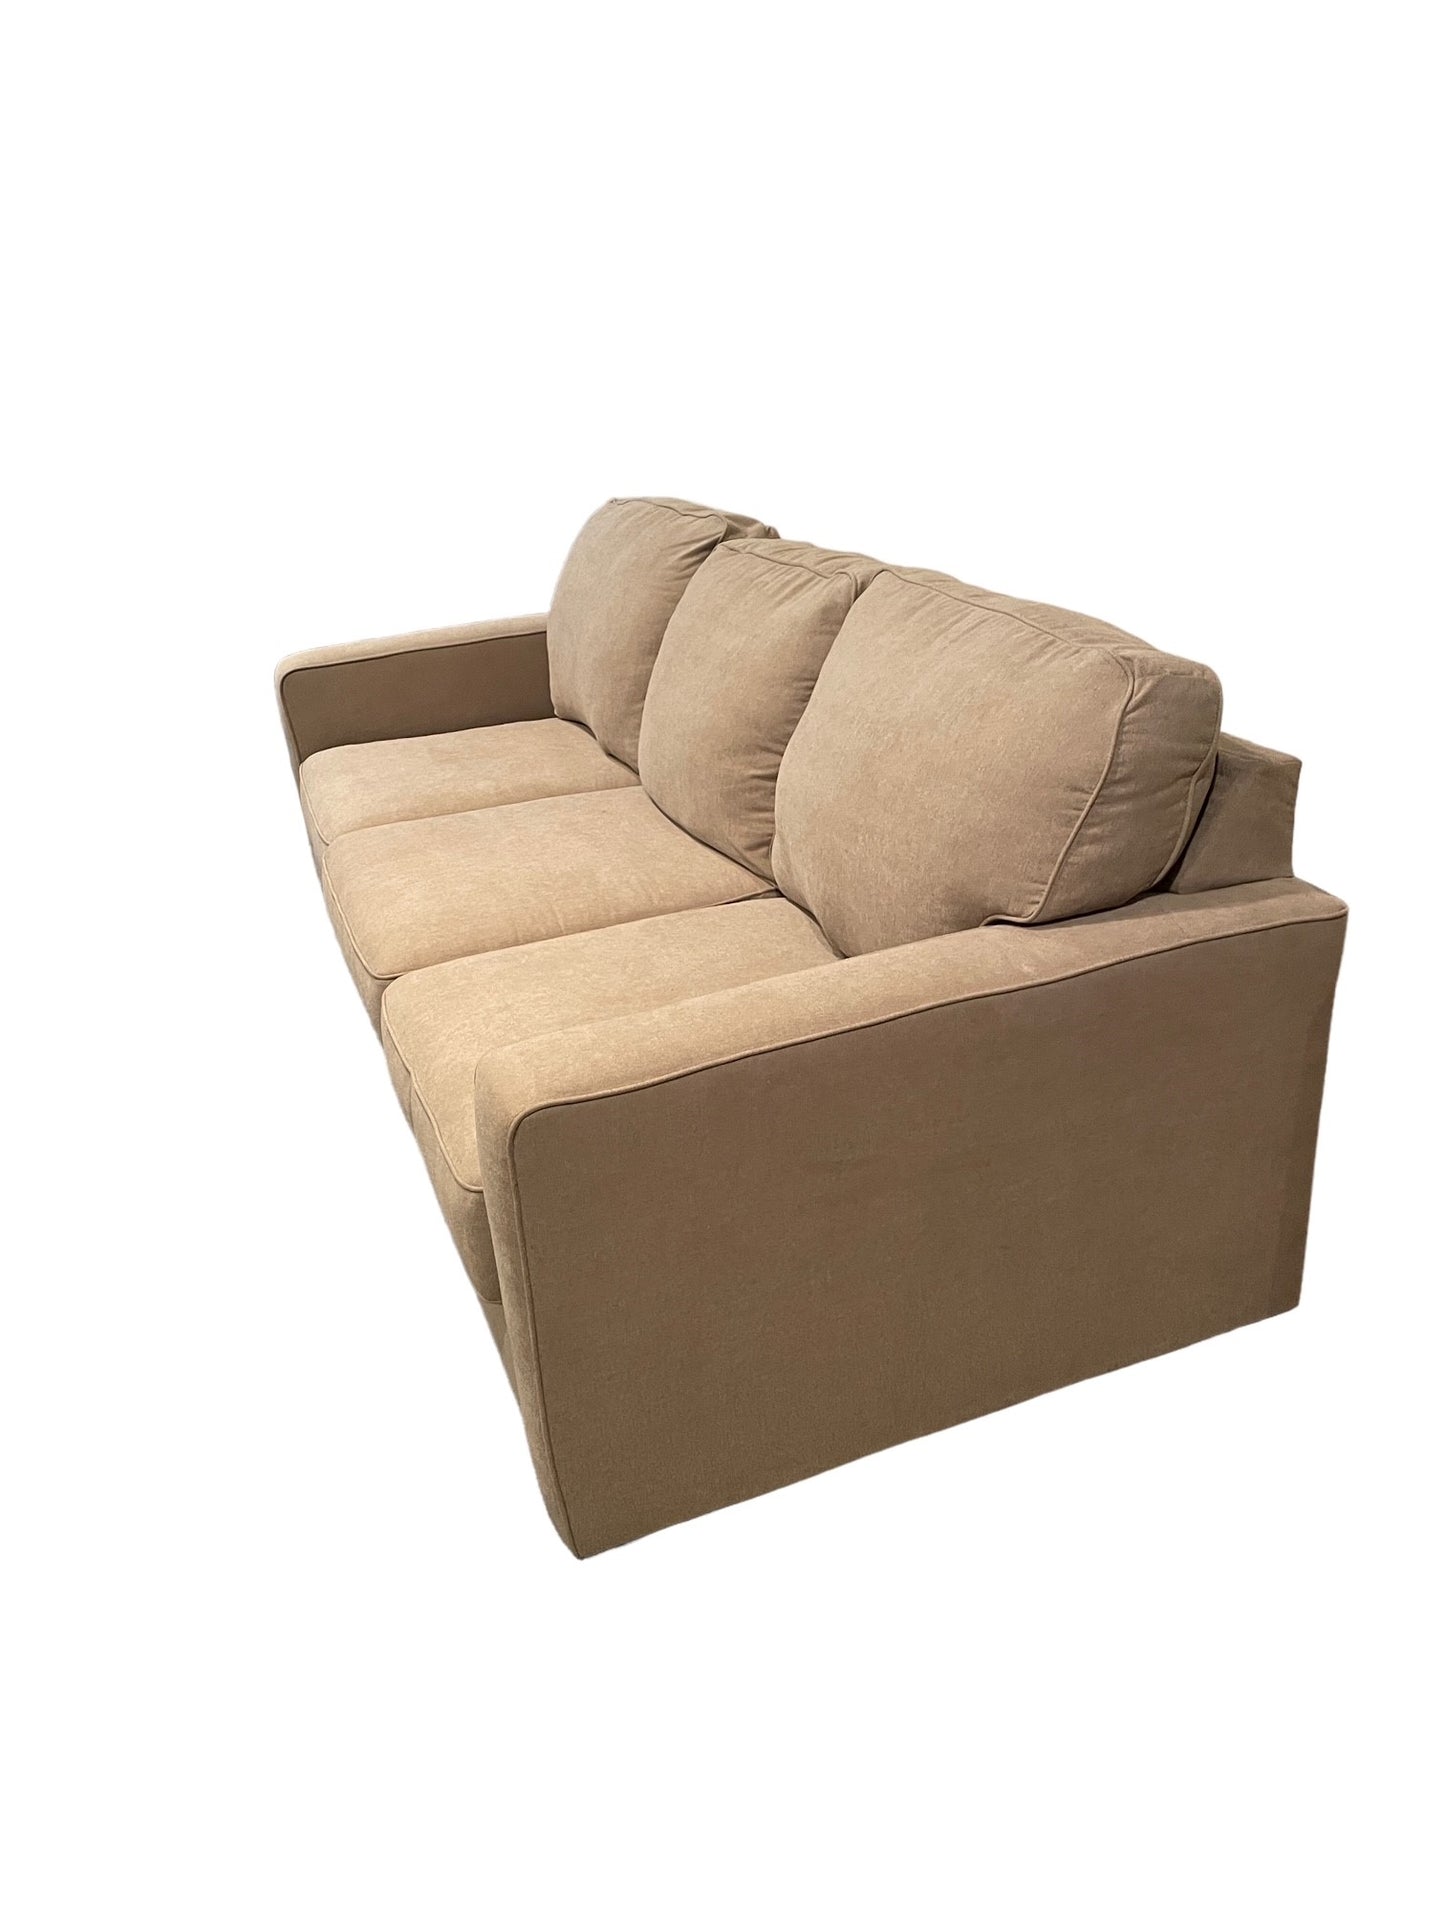 Ashley Furniture Zeb Sleeper Sofa Queen Hide A Bed  AF215-3